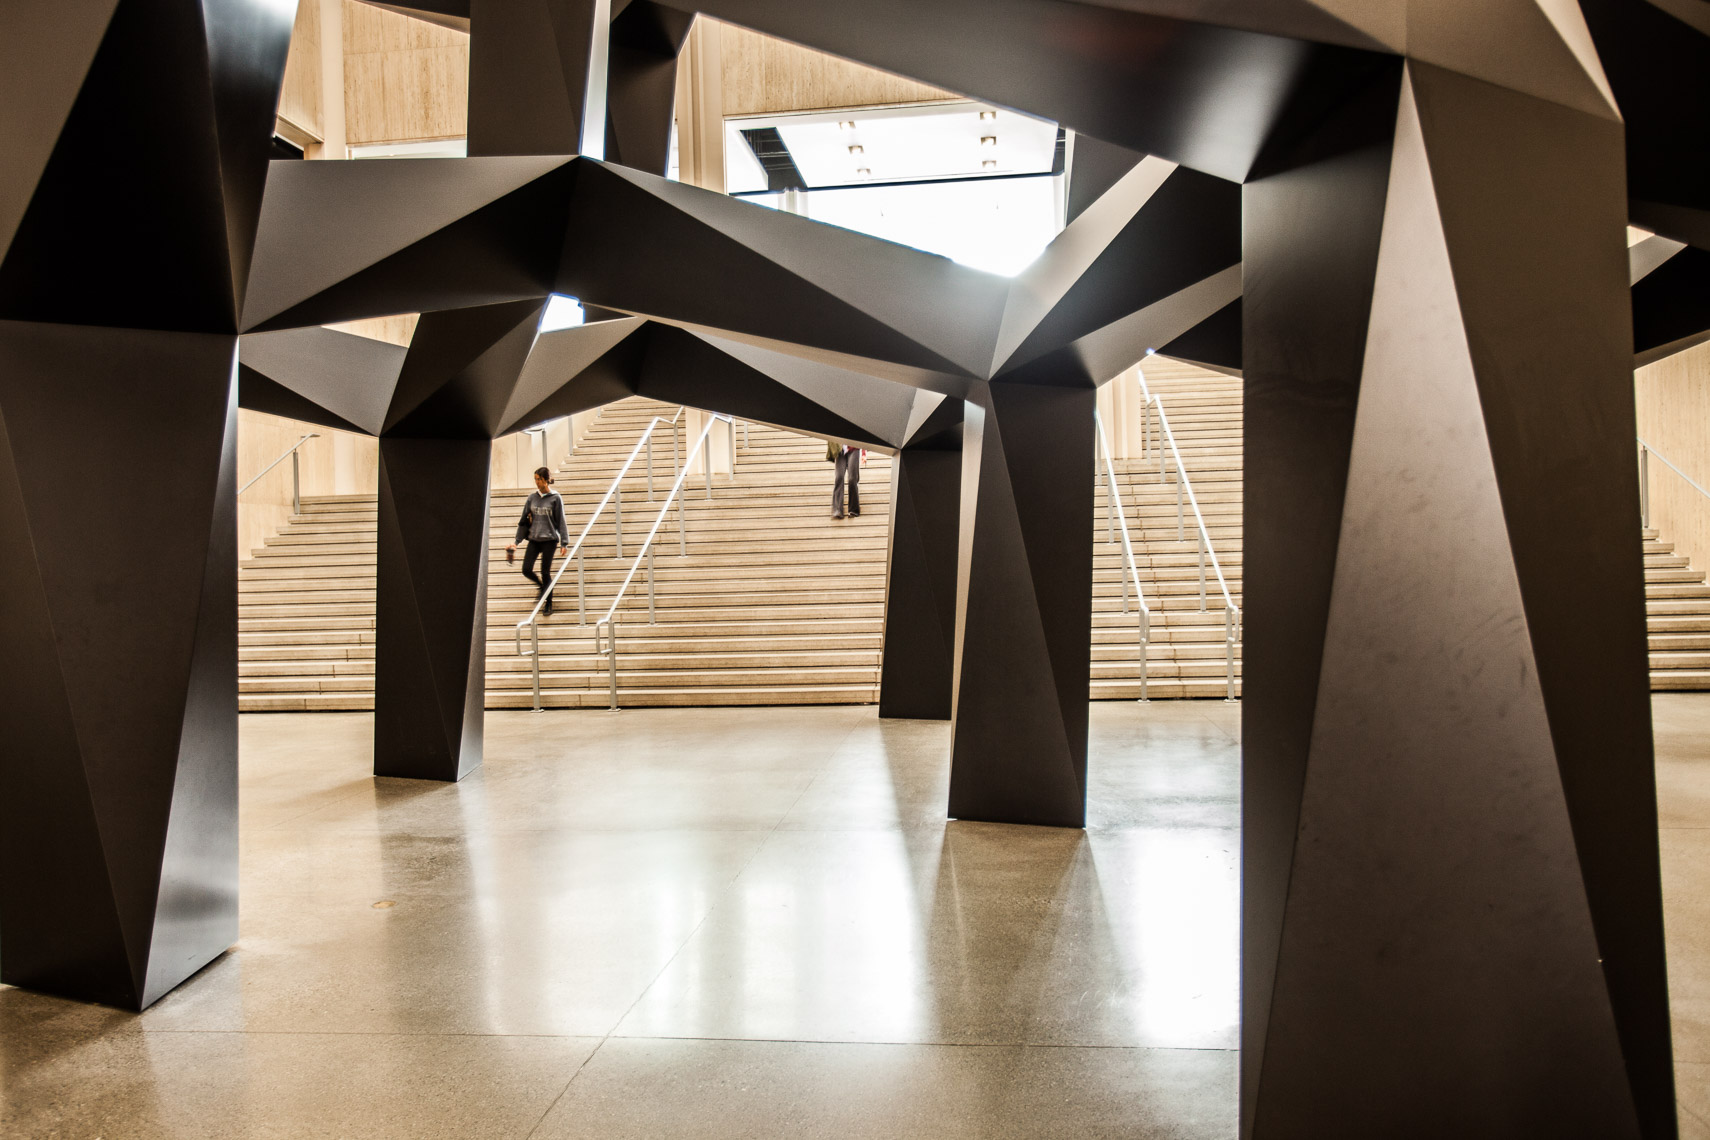 Interior hallway staircase with large sculpture installation lattice